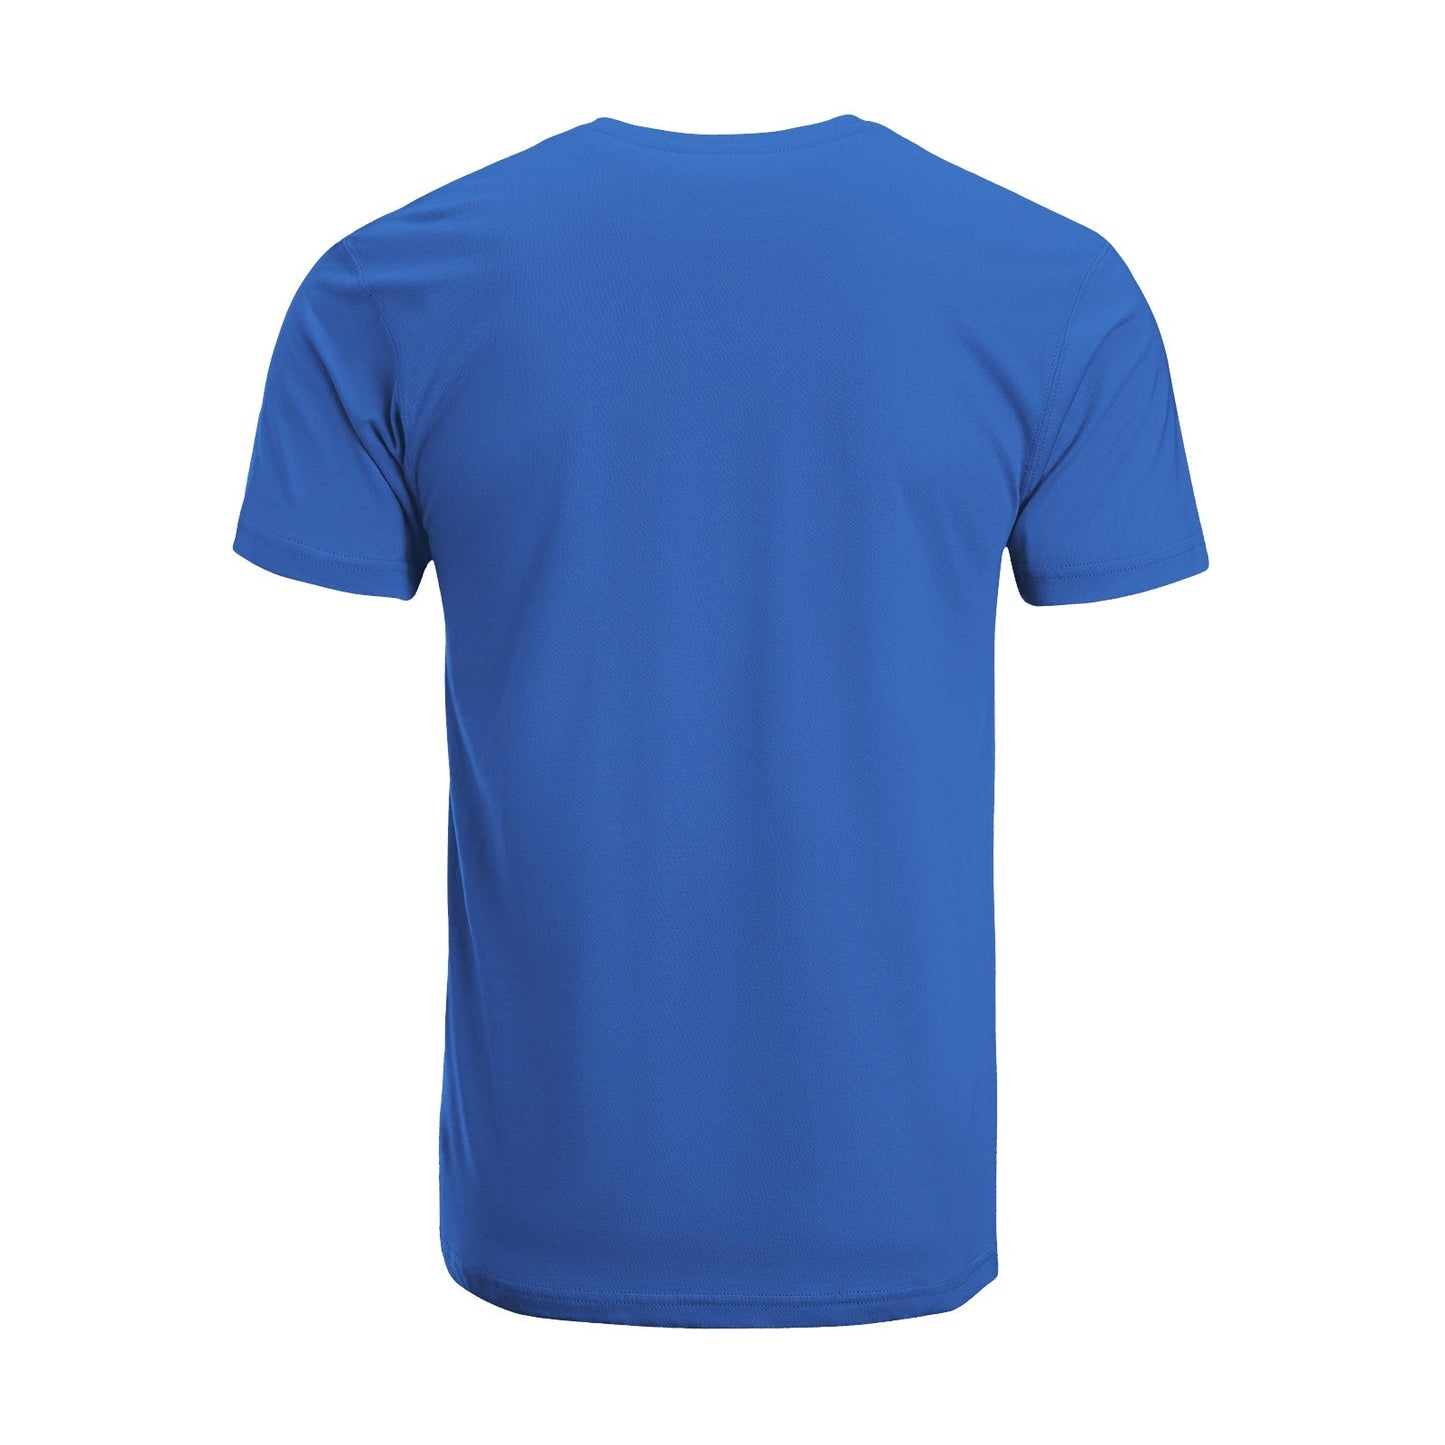 Unisex Short Sleeve Crew Neck Cotton Jersey T-Shirt CAT 45 - Tara-Outfits.com